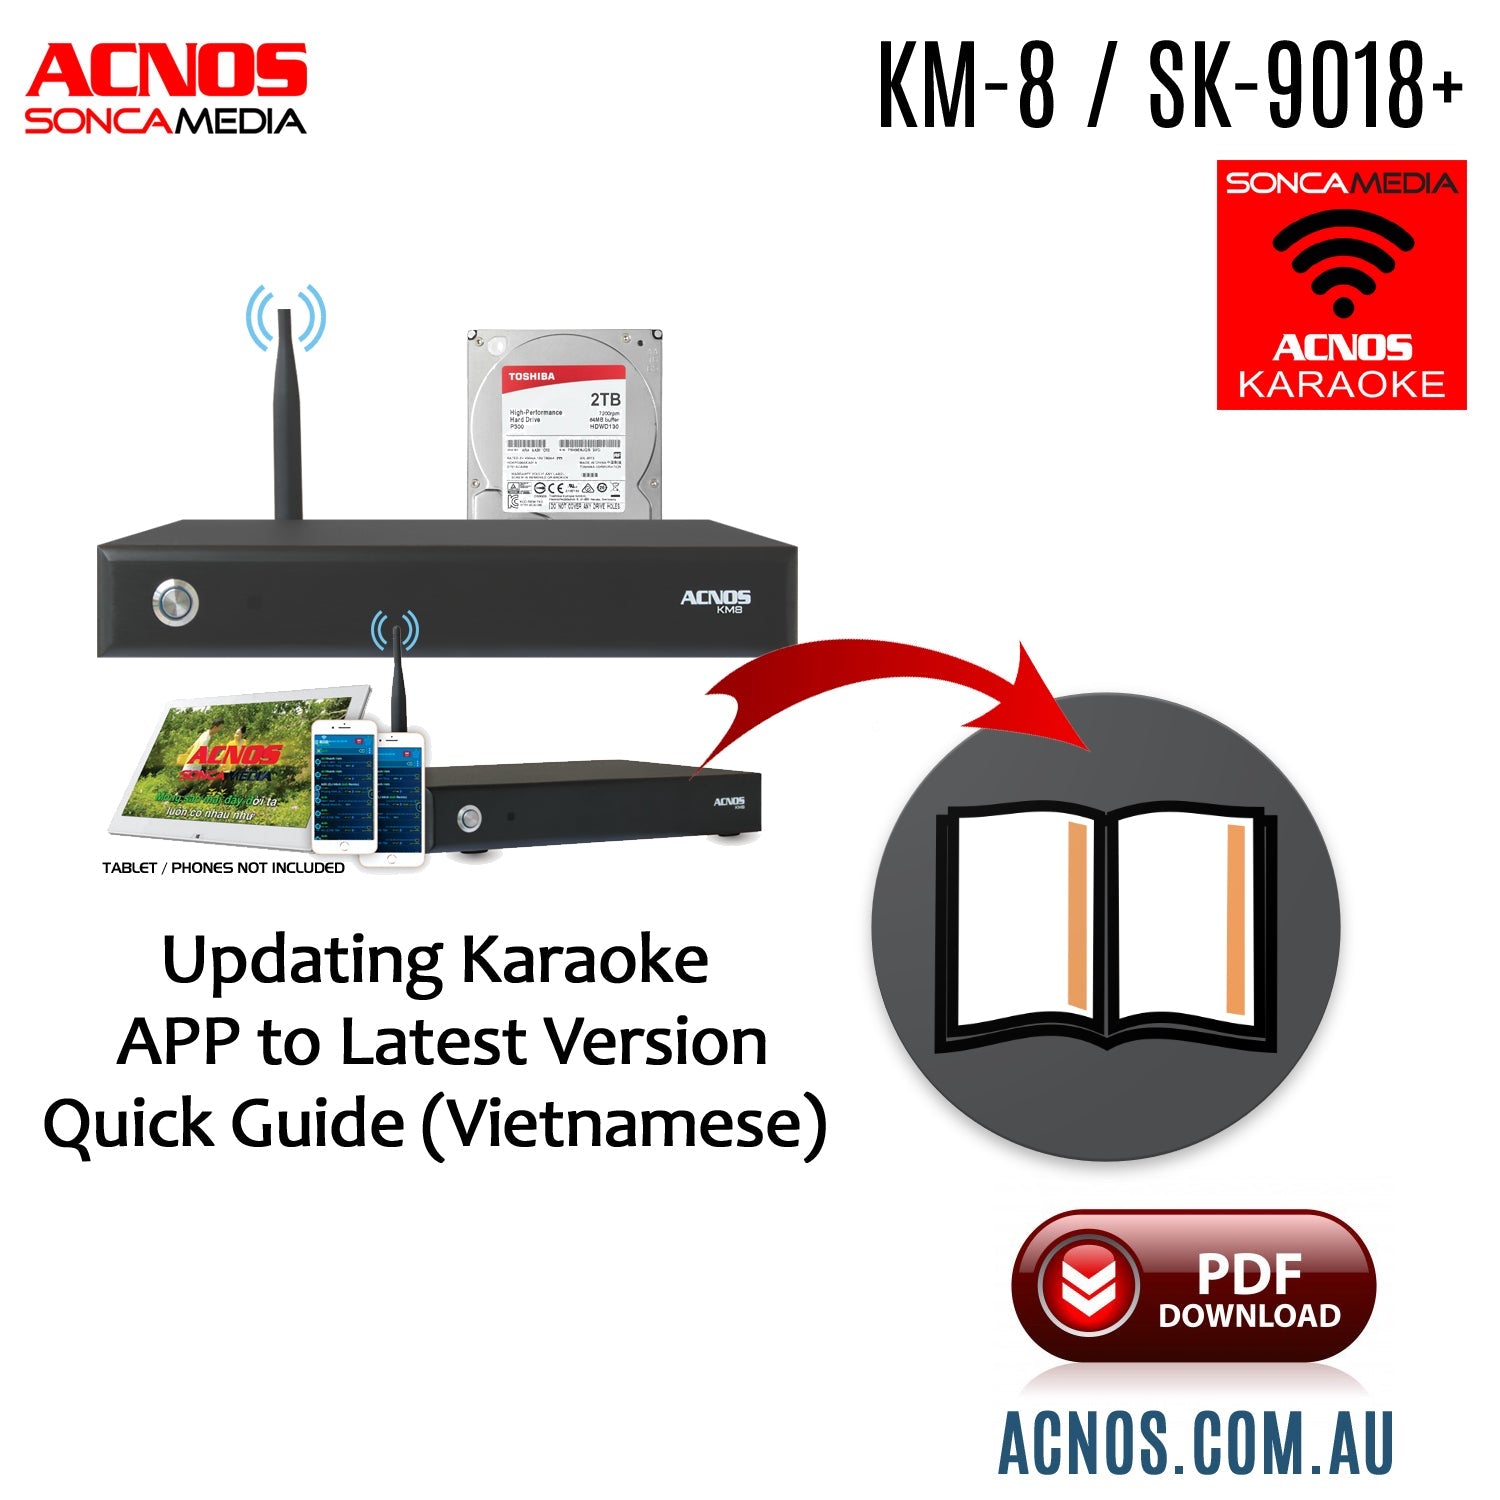 How To Connect Guide - ACNOS KM-8 / SK-9018+ Karaoke HDD APP Update (Vietnamese) - Karaoke Home Entertainment